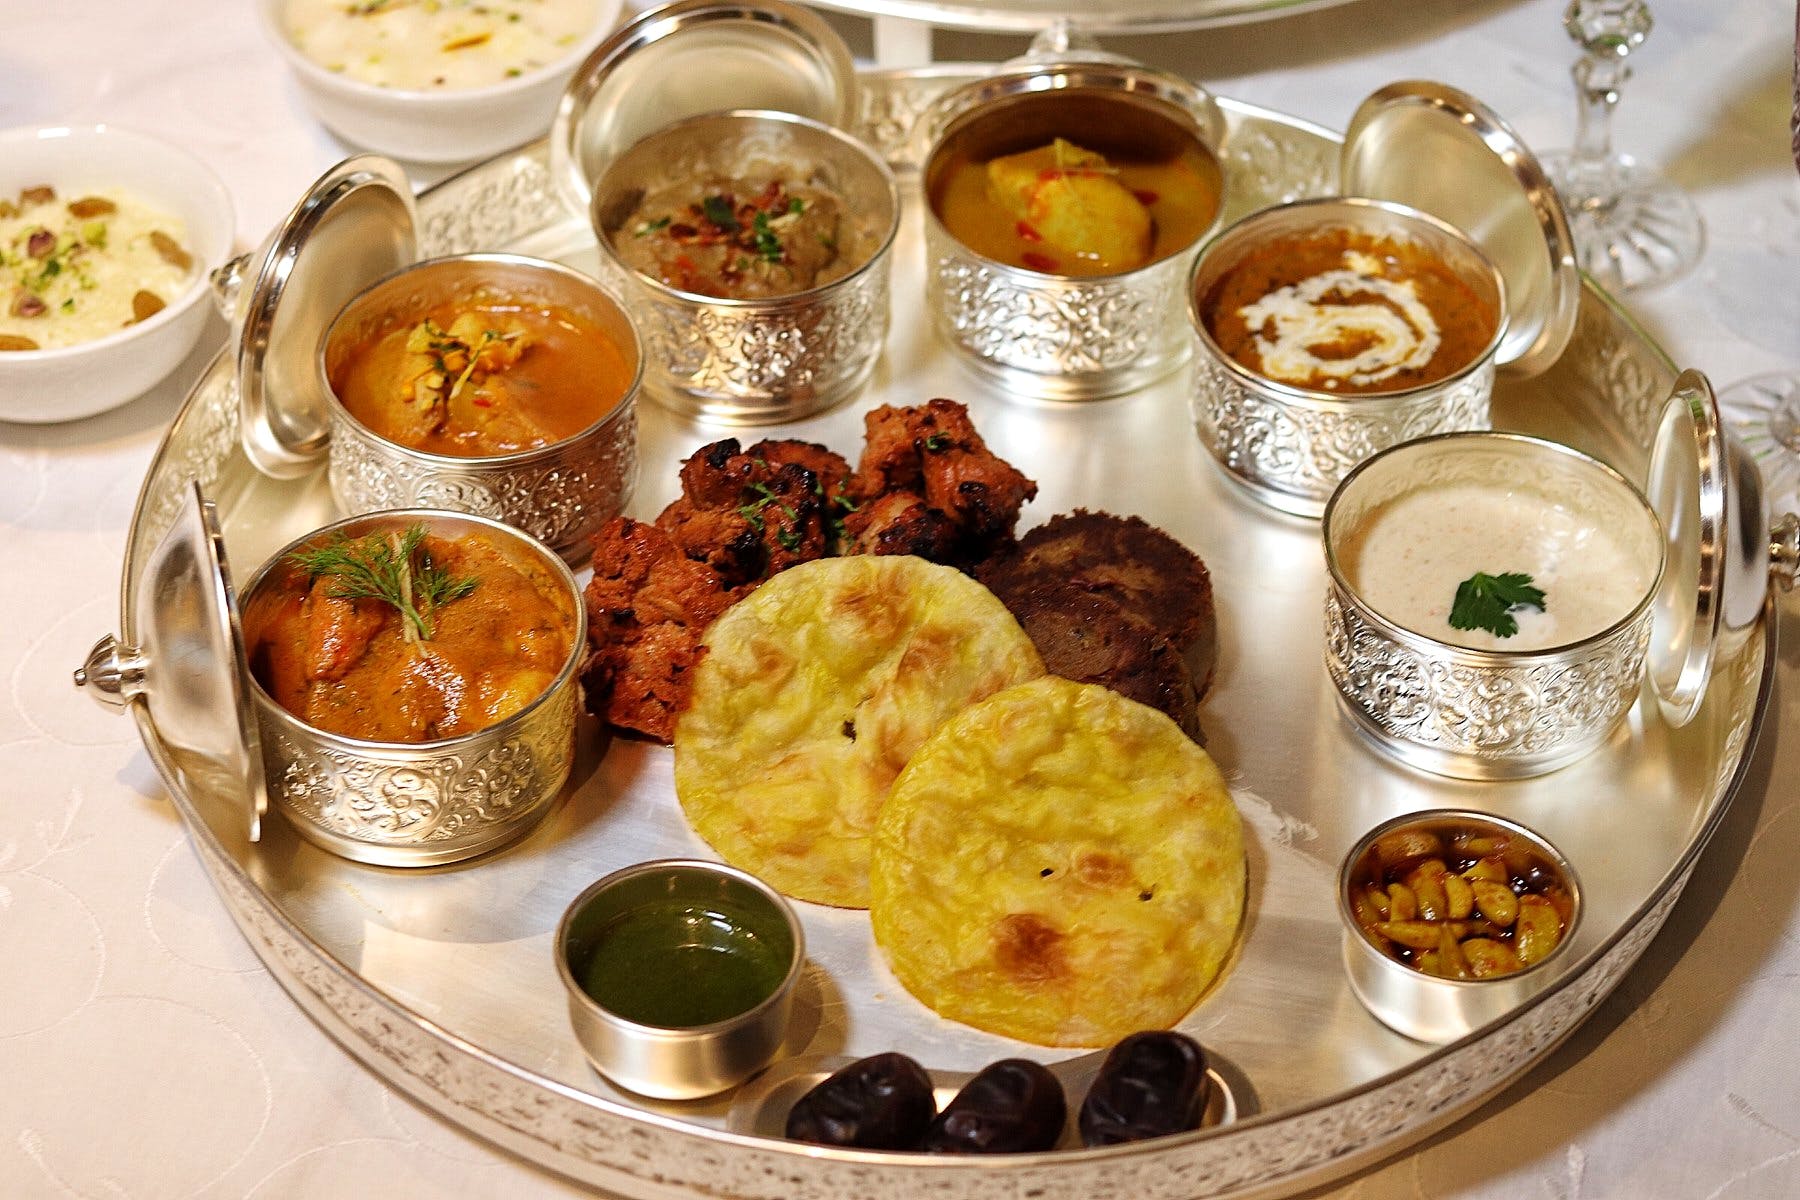 Dish,Food,Cuisine,Meal,Ingredient,Brunch,Breakfast,Indian cuisine,Produce,Finger food